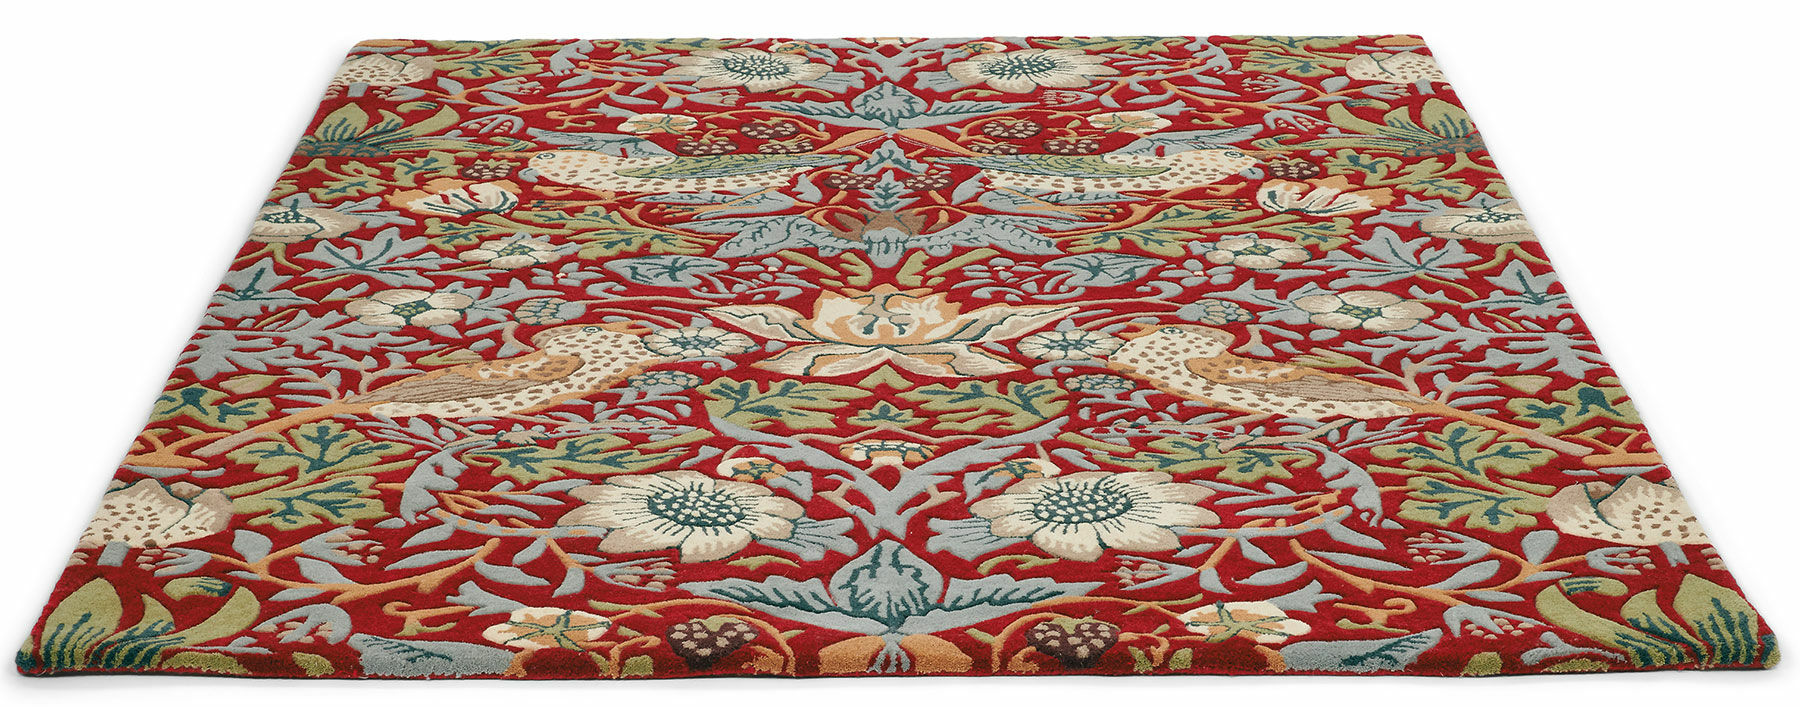 Carpet "Strawberry Thief Red" (140 x 200 cm) - after William Morris